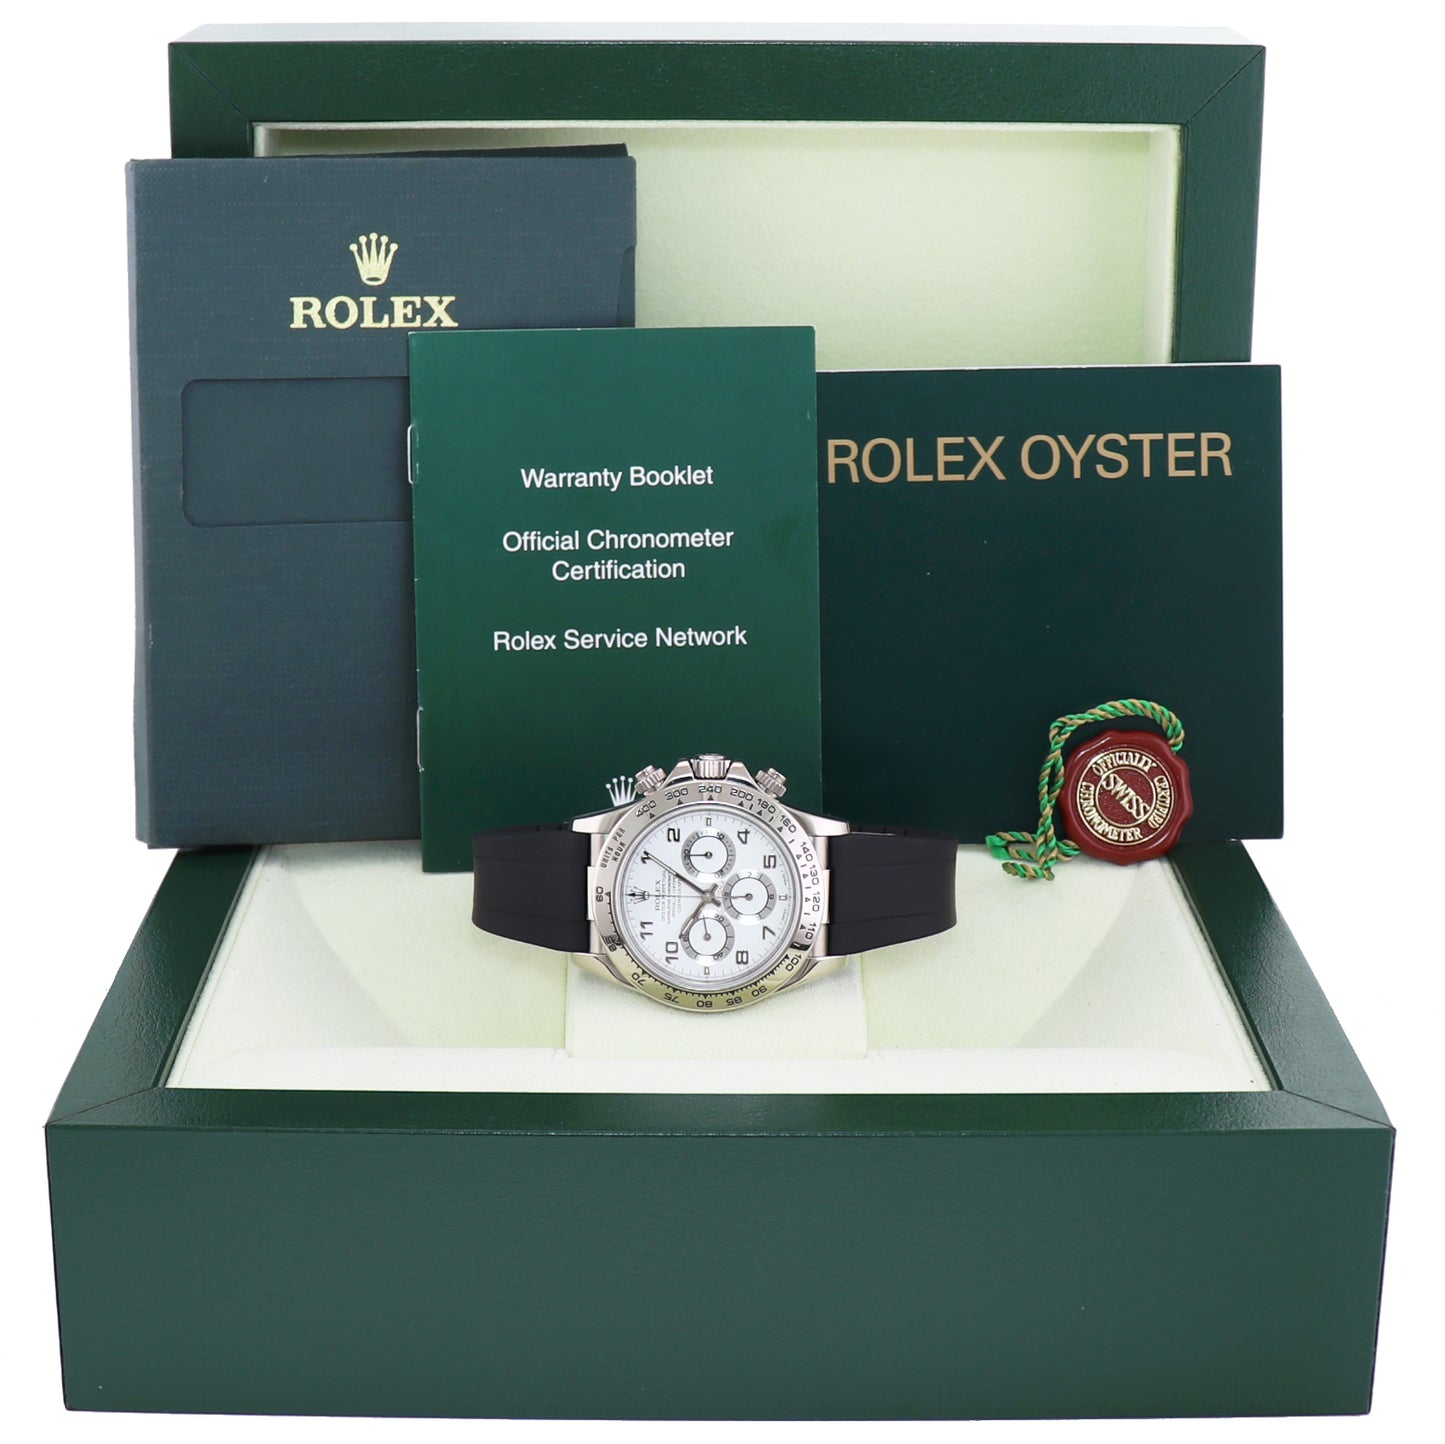 MINT Rolex Daytona White Gold Zenith 16519 Black Rubber White Arabic Dial Watch